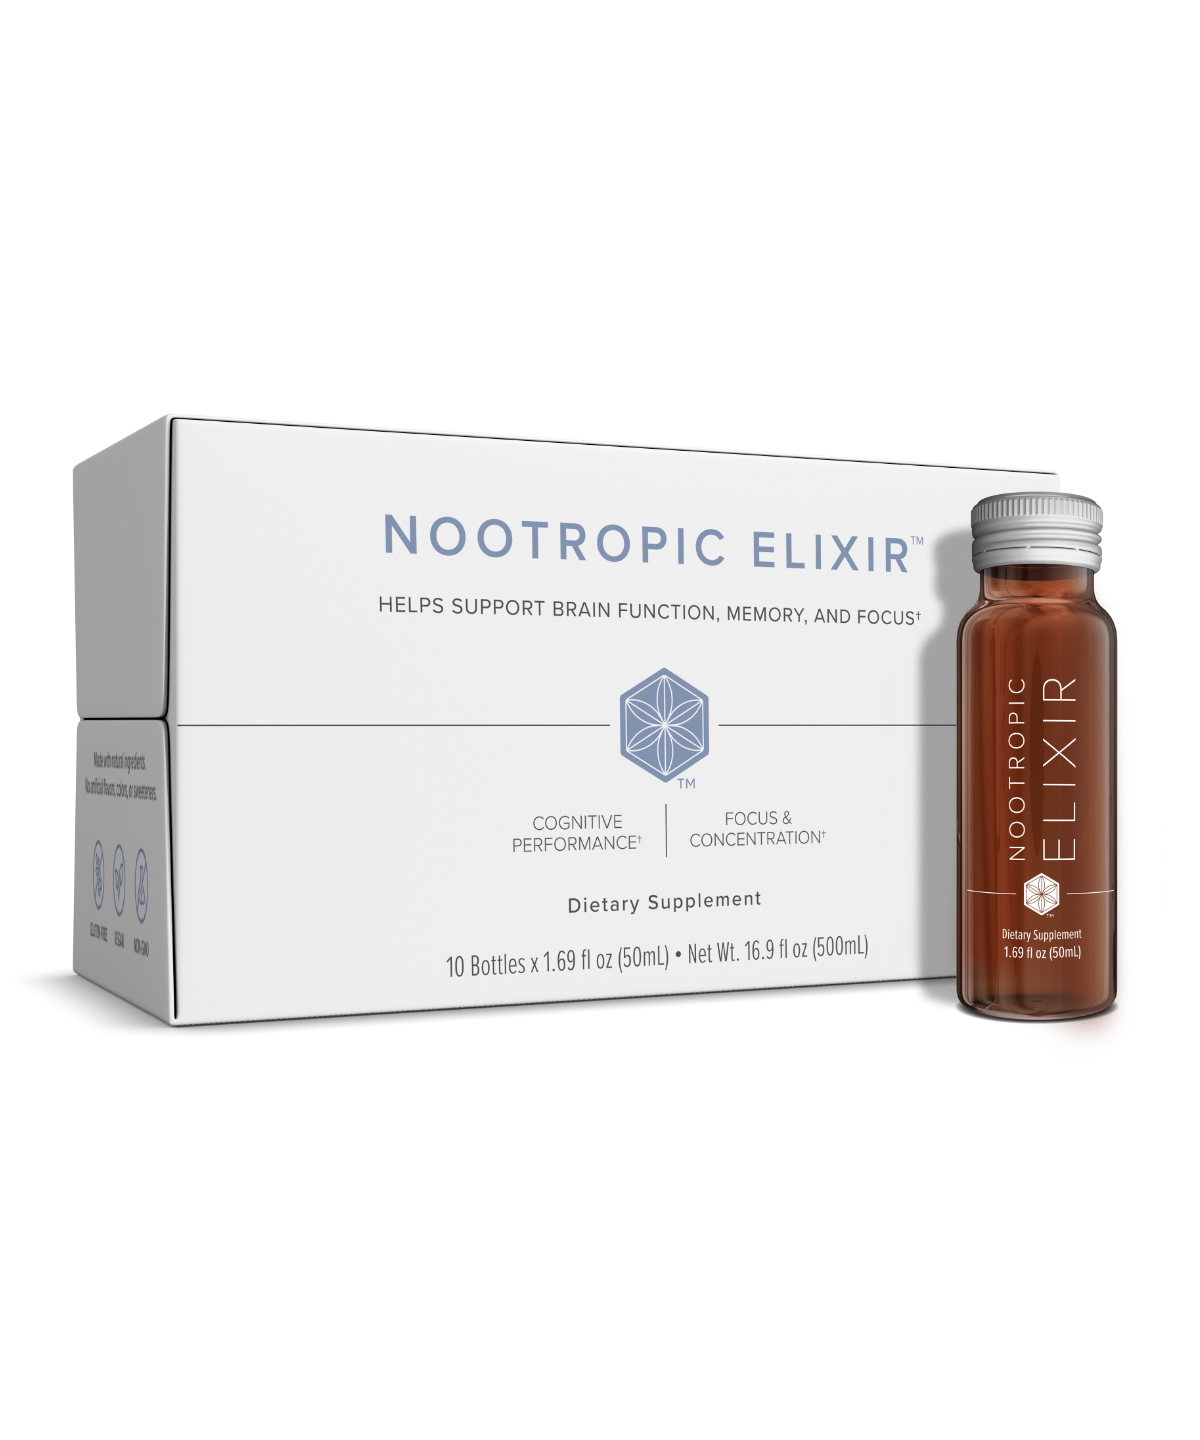 nootropic-elixir-box-bottleig1-1200x1440